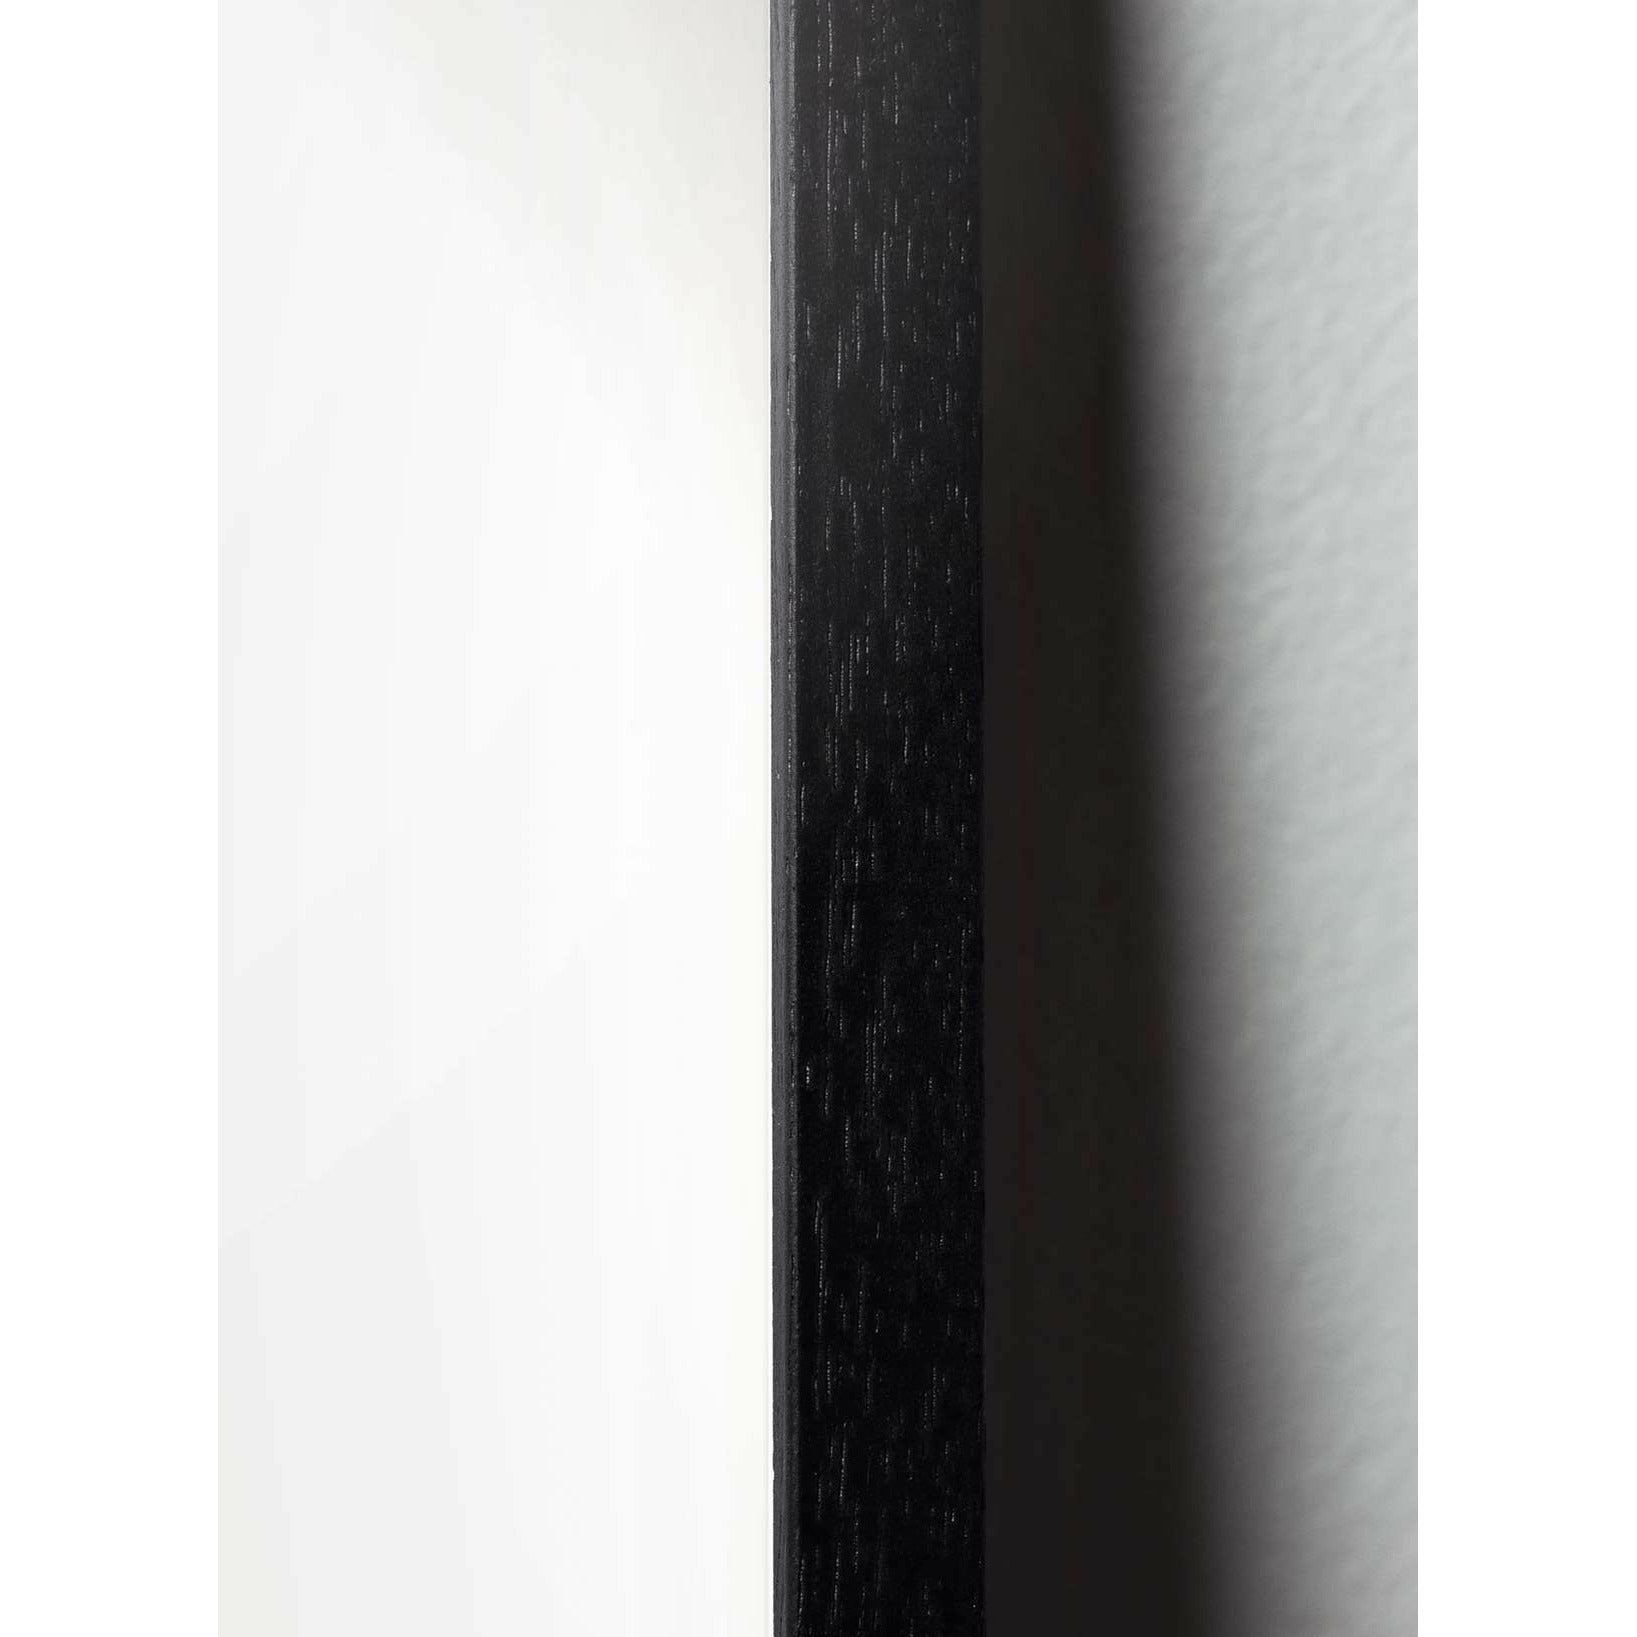 Póster clásico de huevo de creación, marco en madera lacada negra de 30x40 cm, fondo negro